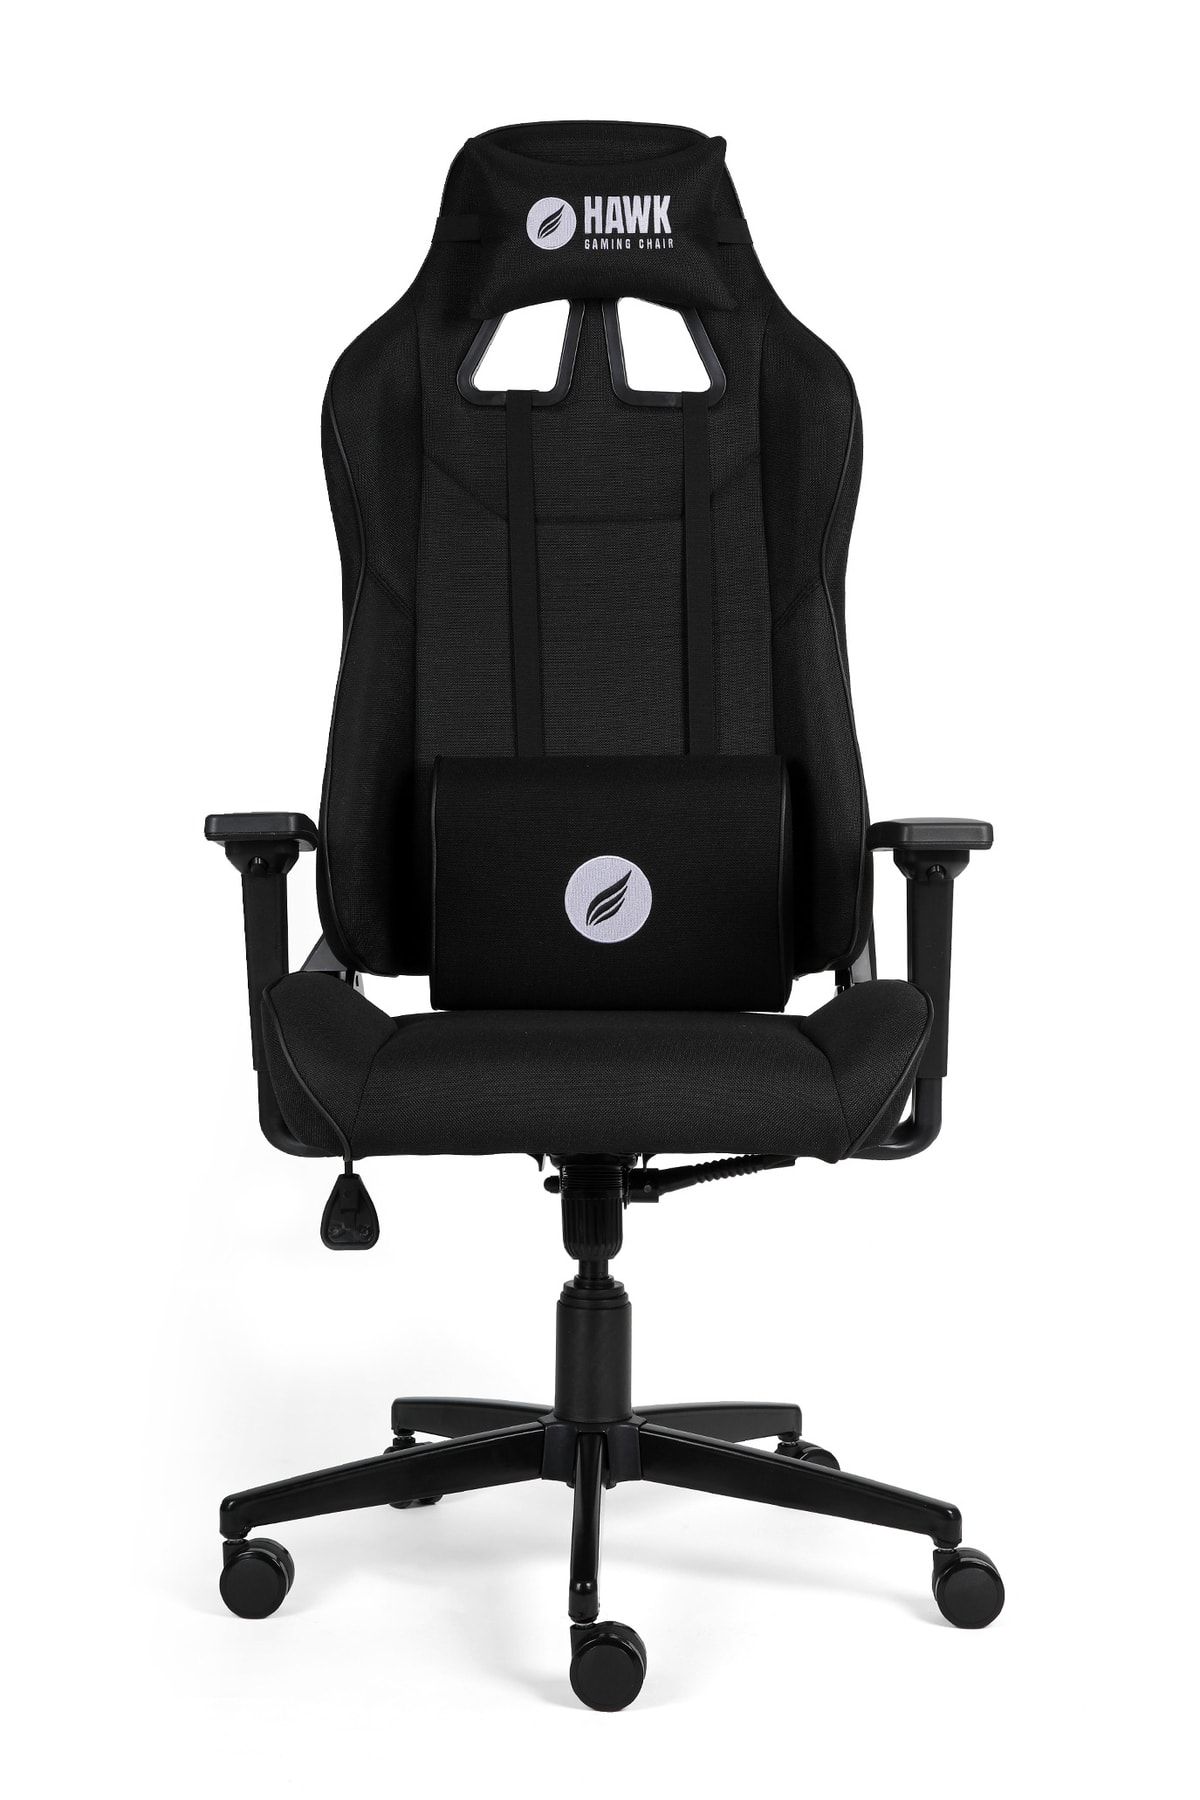 Hawk Gaming Chair Hawk Gaming Chair Fab V4 Kumaş Oyuncu Koltuğu